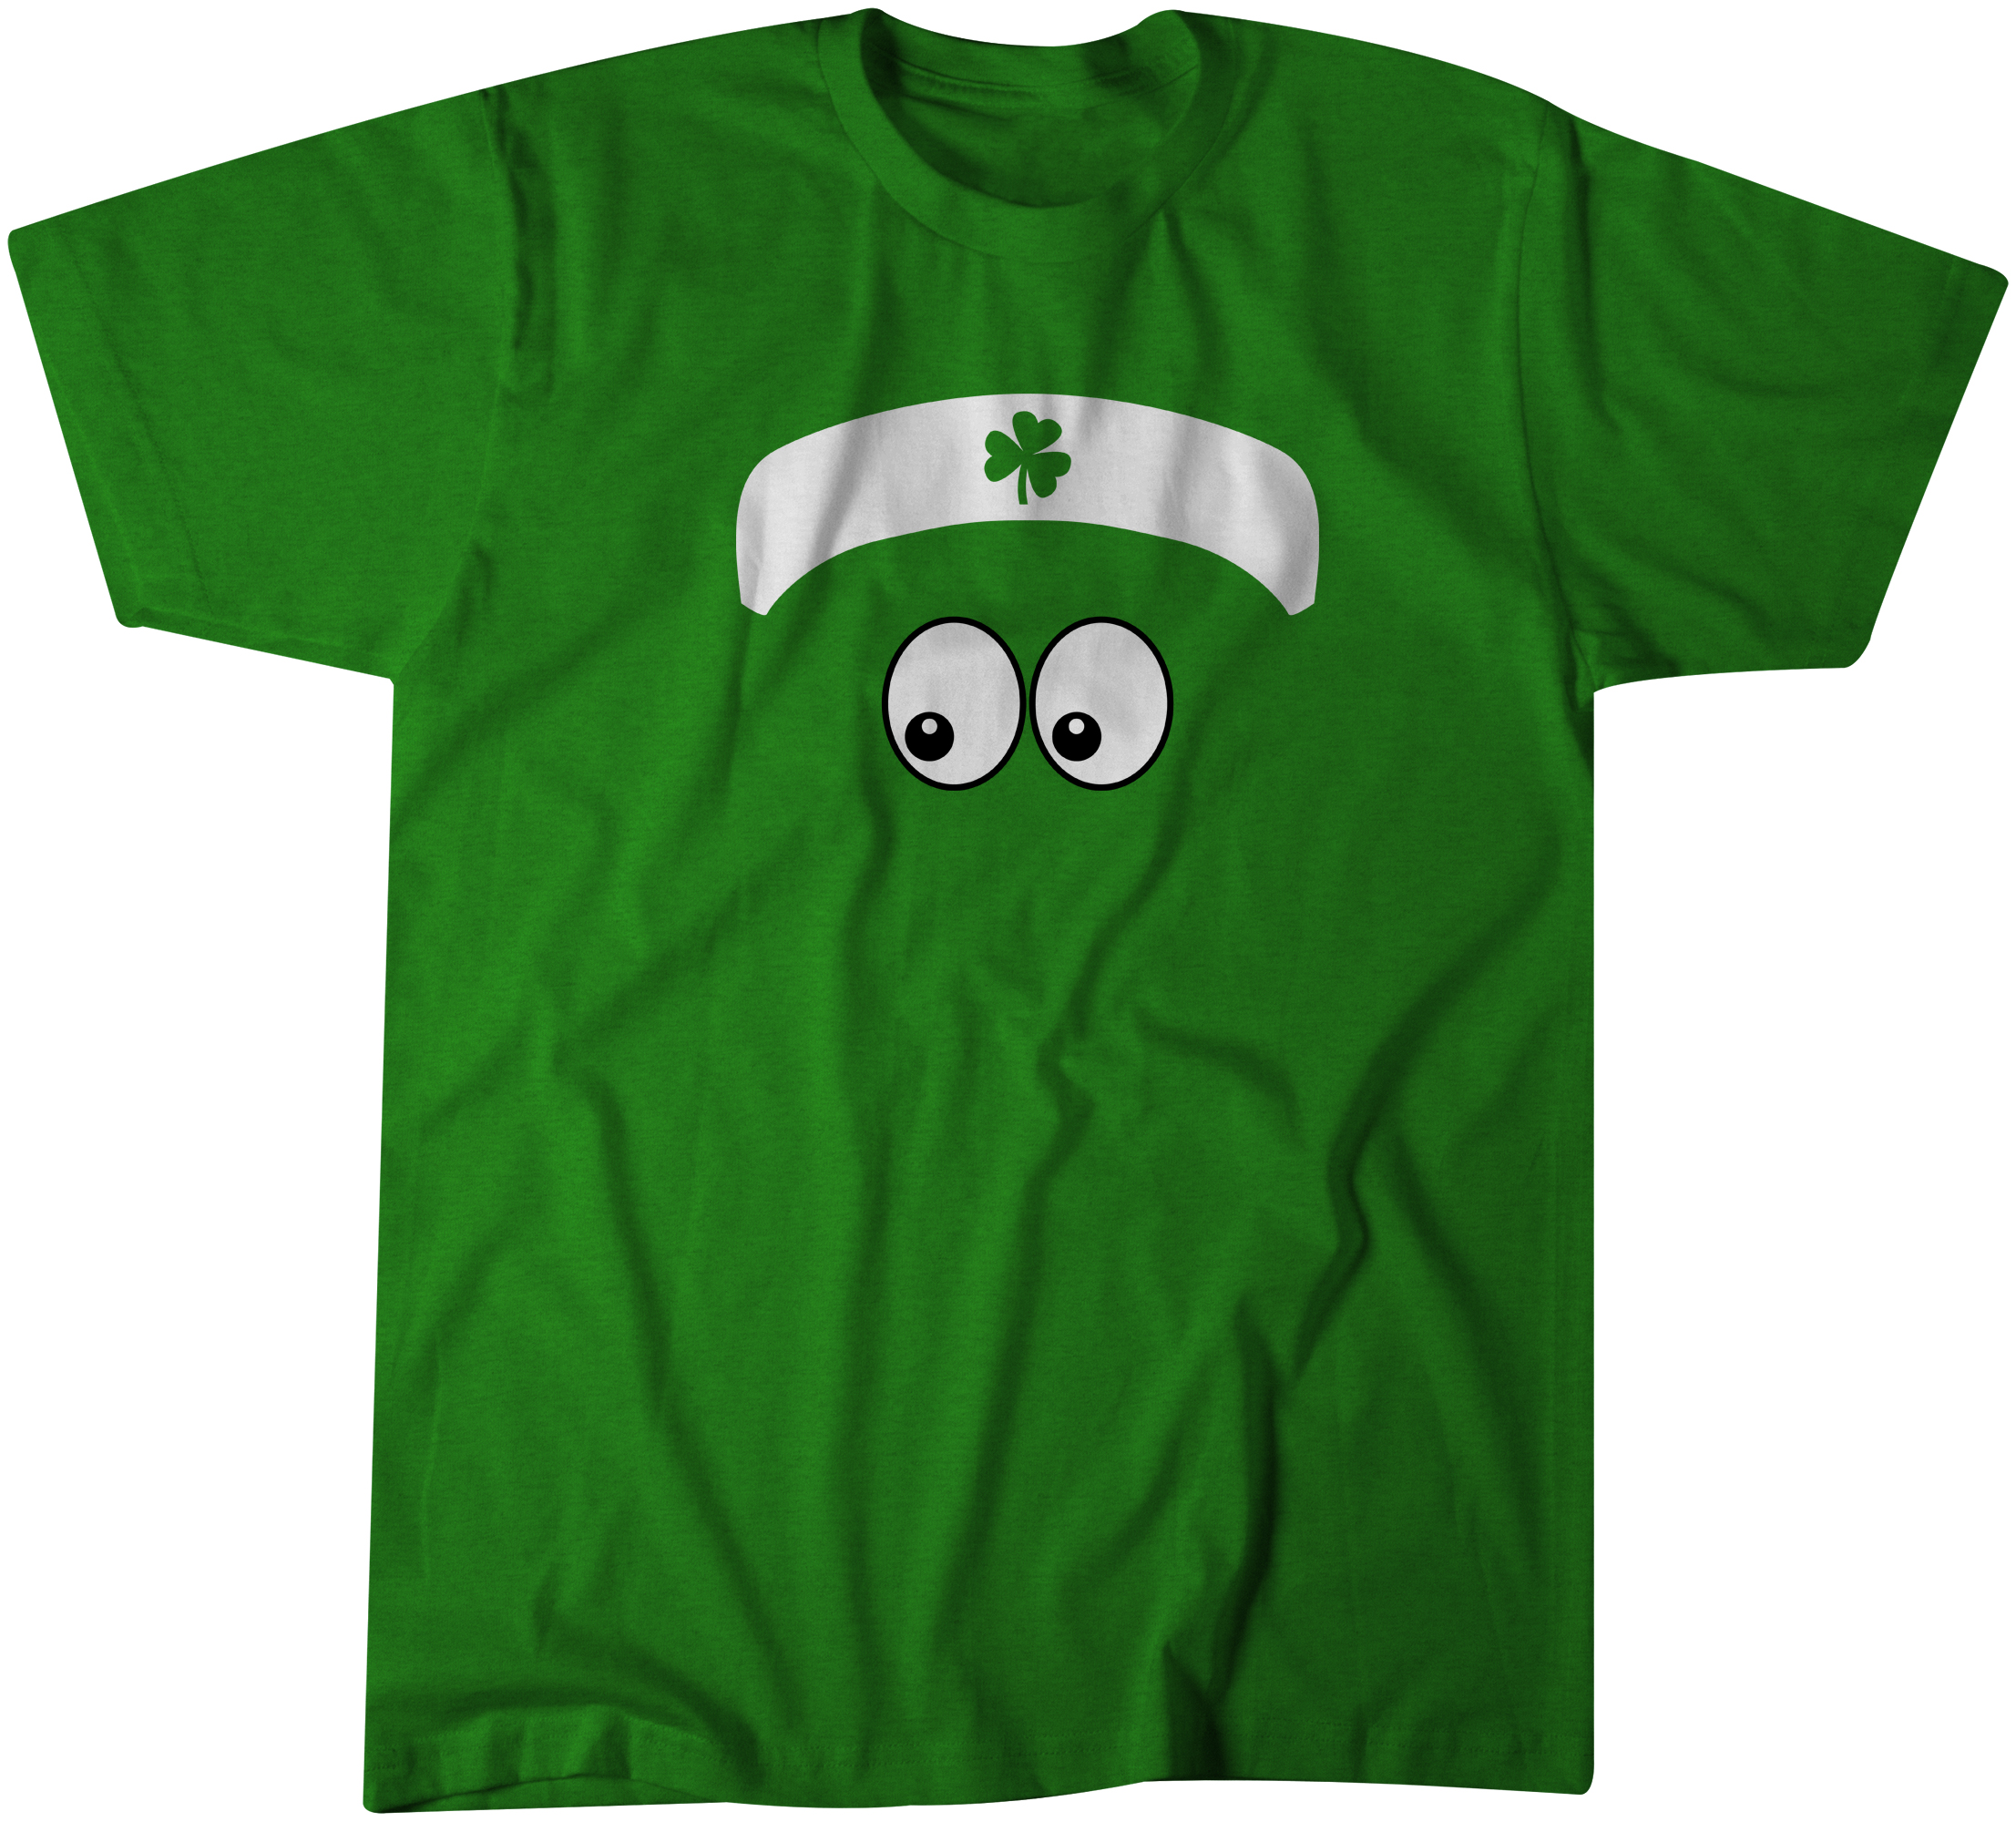 Get the Isaiah Thomas Emoji T-Shirt